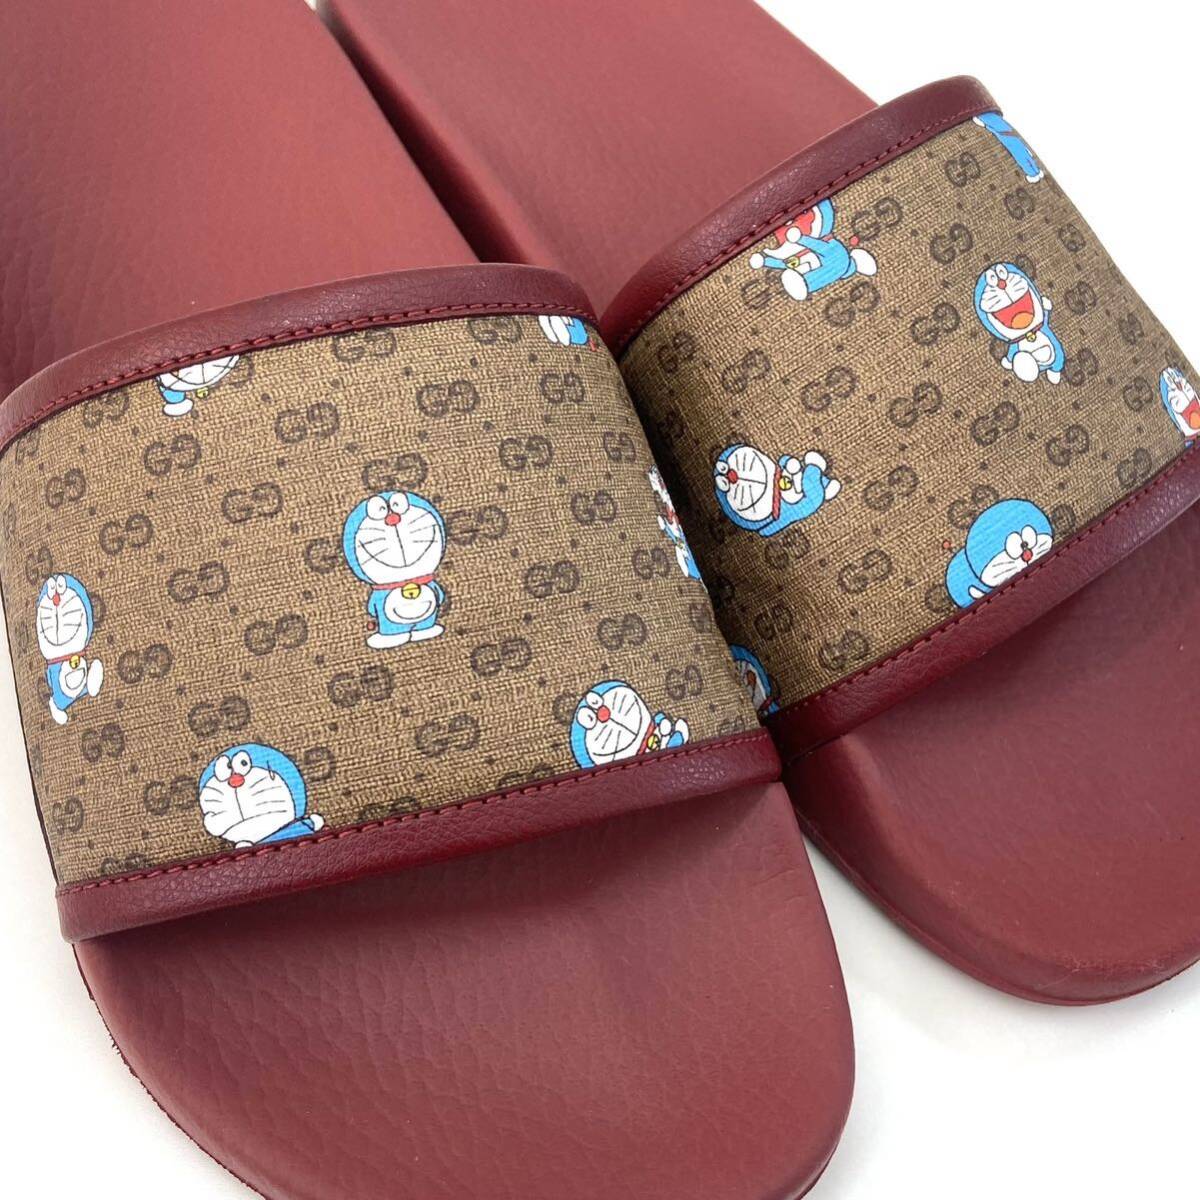 [ не использовался товар ]GUCCI Gucci обувь Doraemon Doraemon Flat шлепанцы для душа Raver размер 9 a194